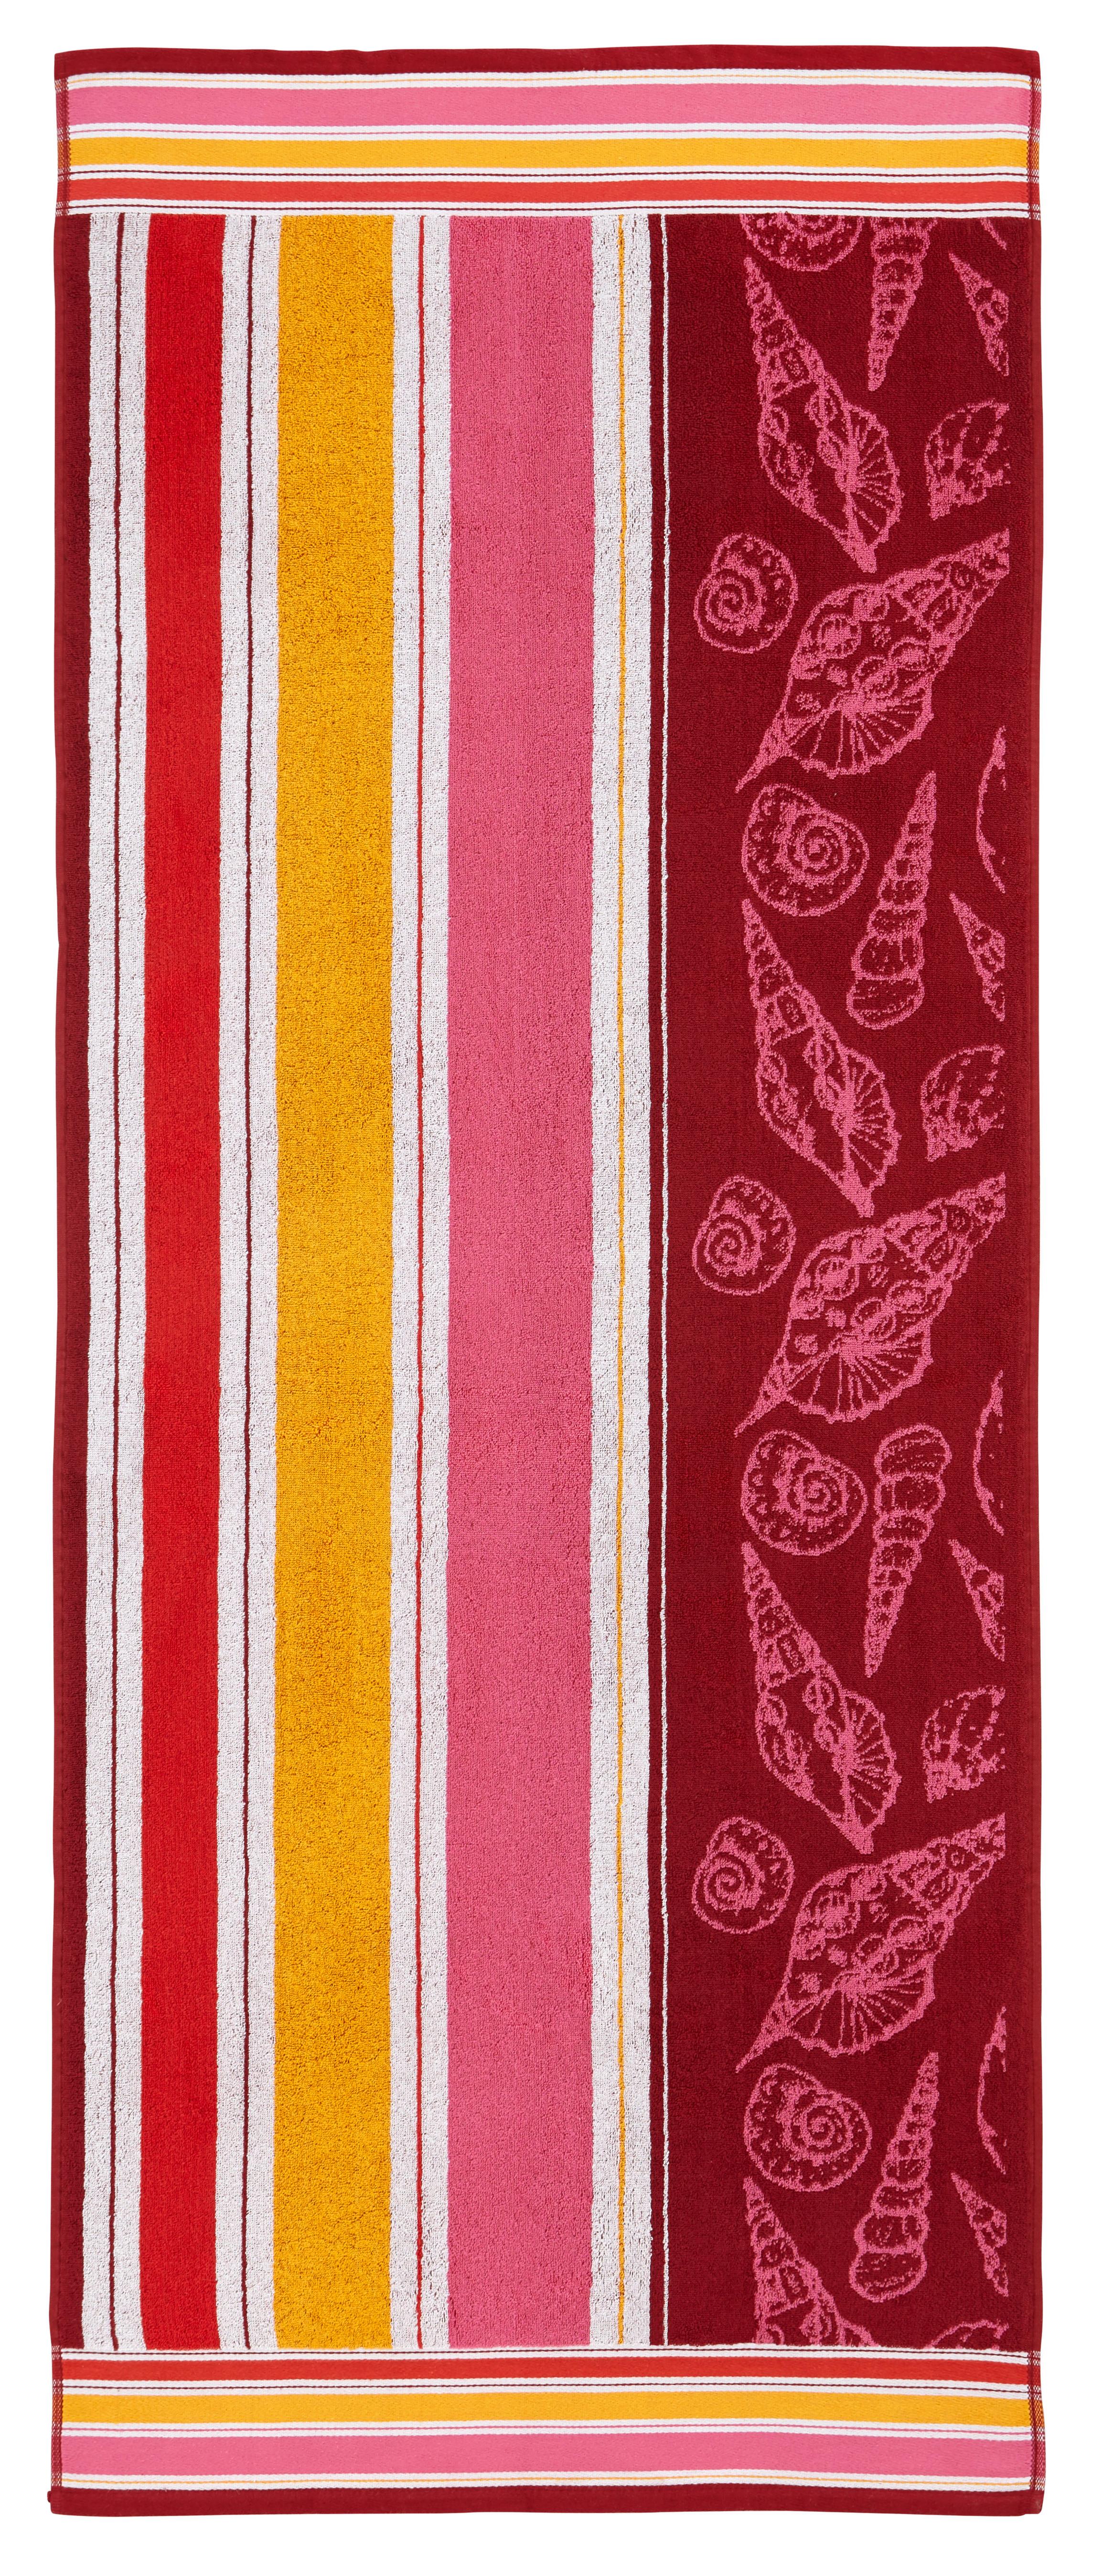 Strandtuch Dyckhoff ca.70x180cm - Rot, KONVENTIONELL, Textil (70/180cm) - Dyckhoff